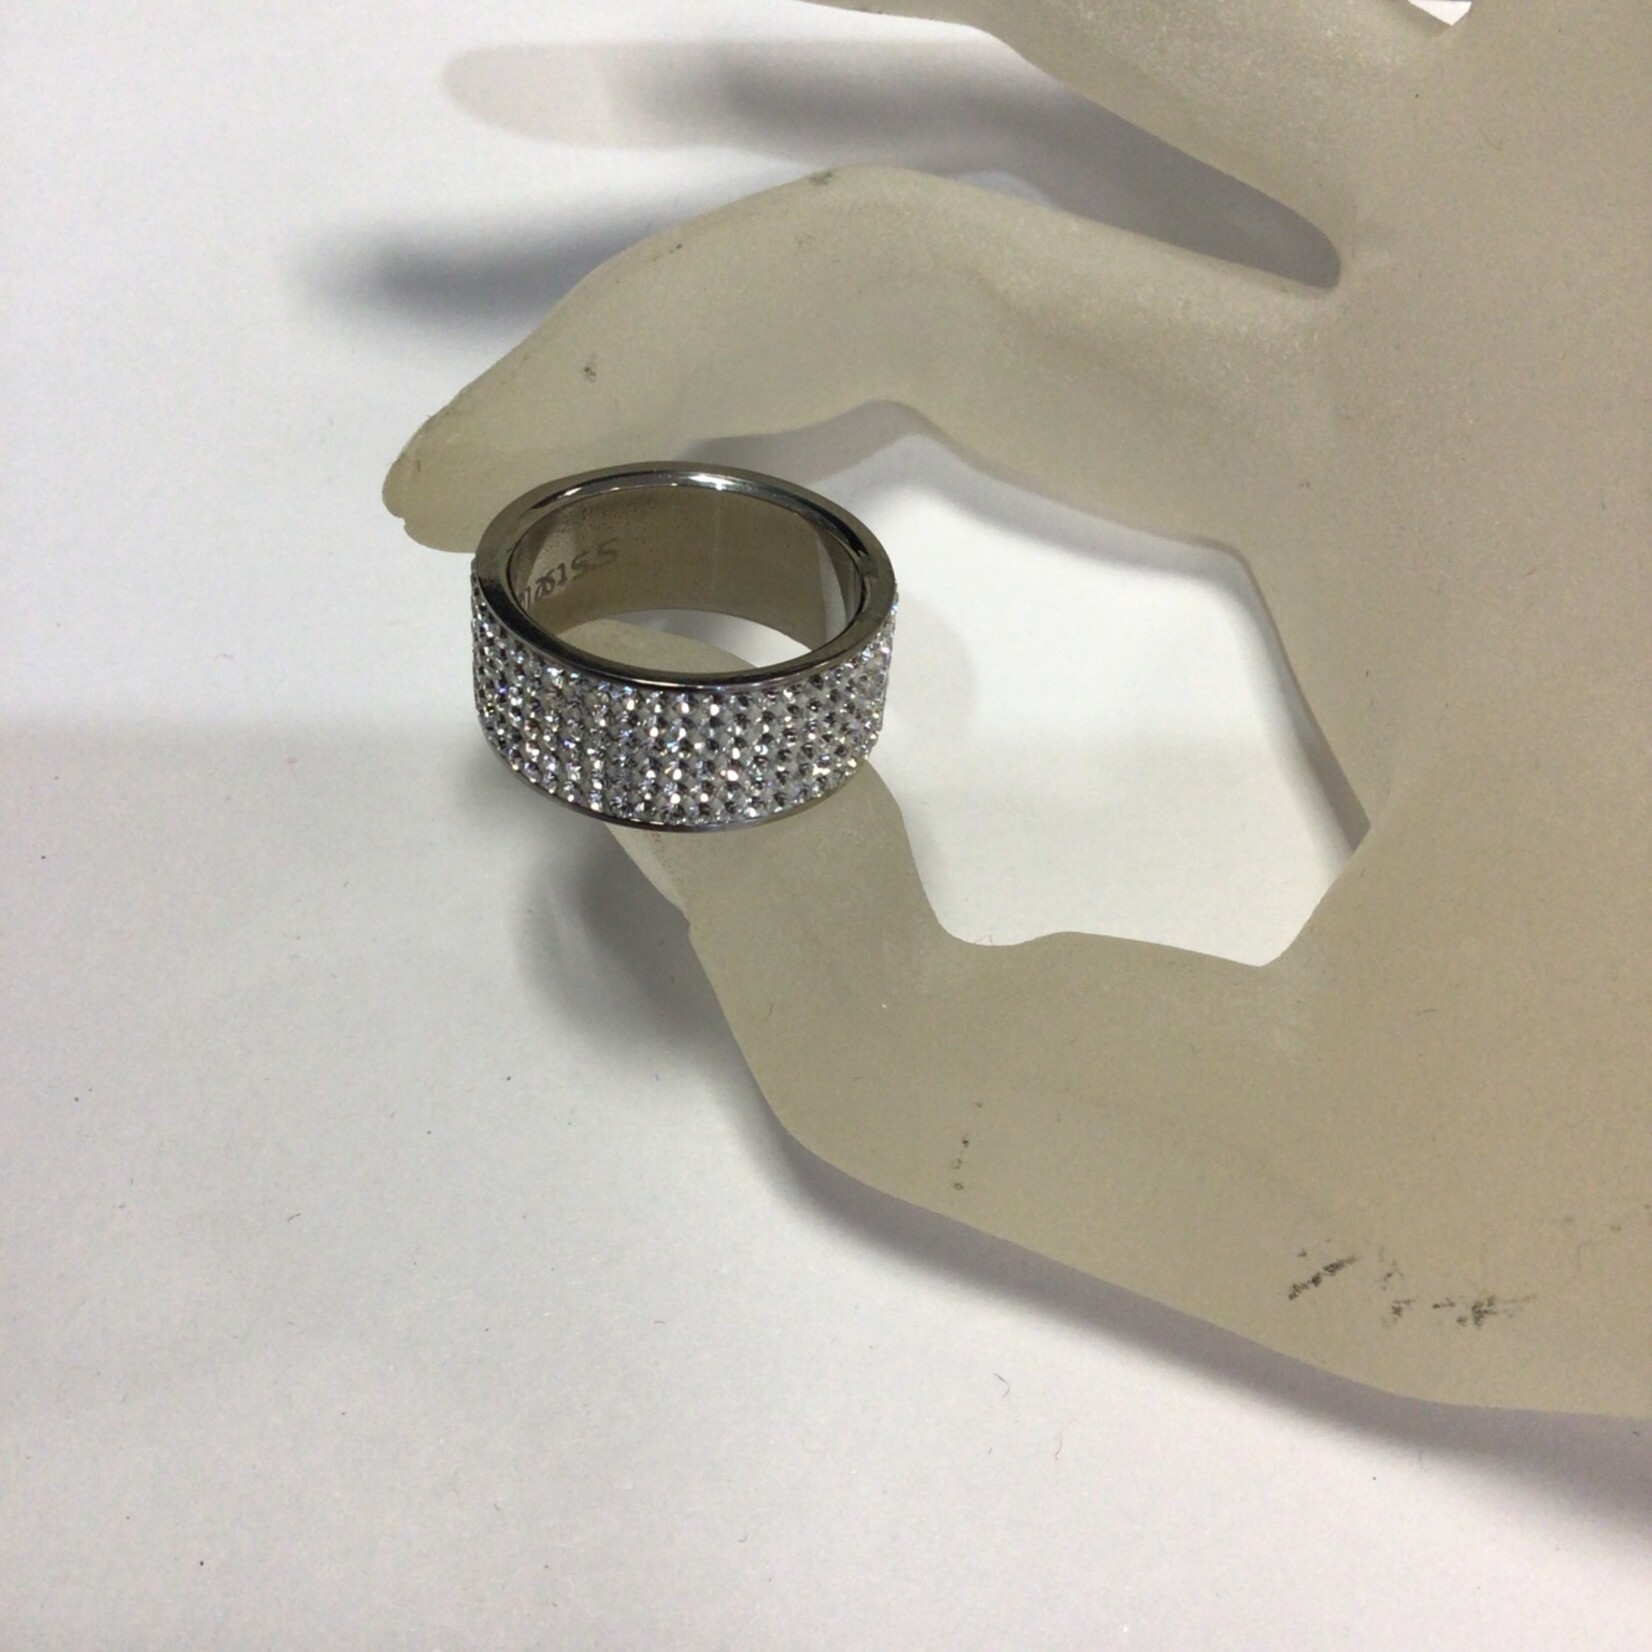 Bel-Eve Swarovski Stainless Steel Ring - Sz 9